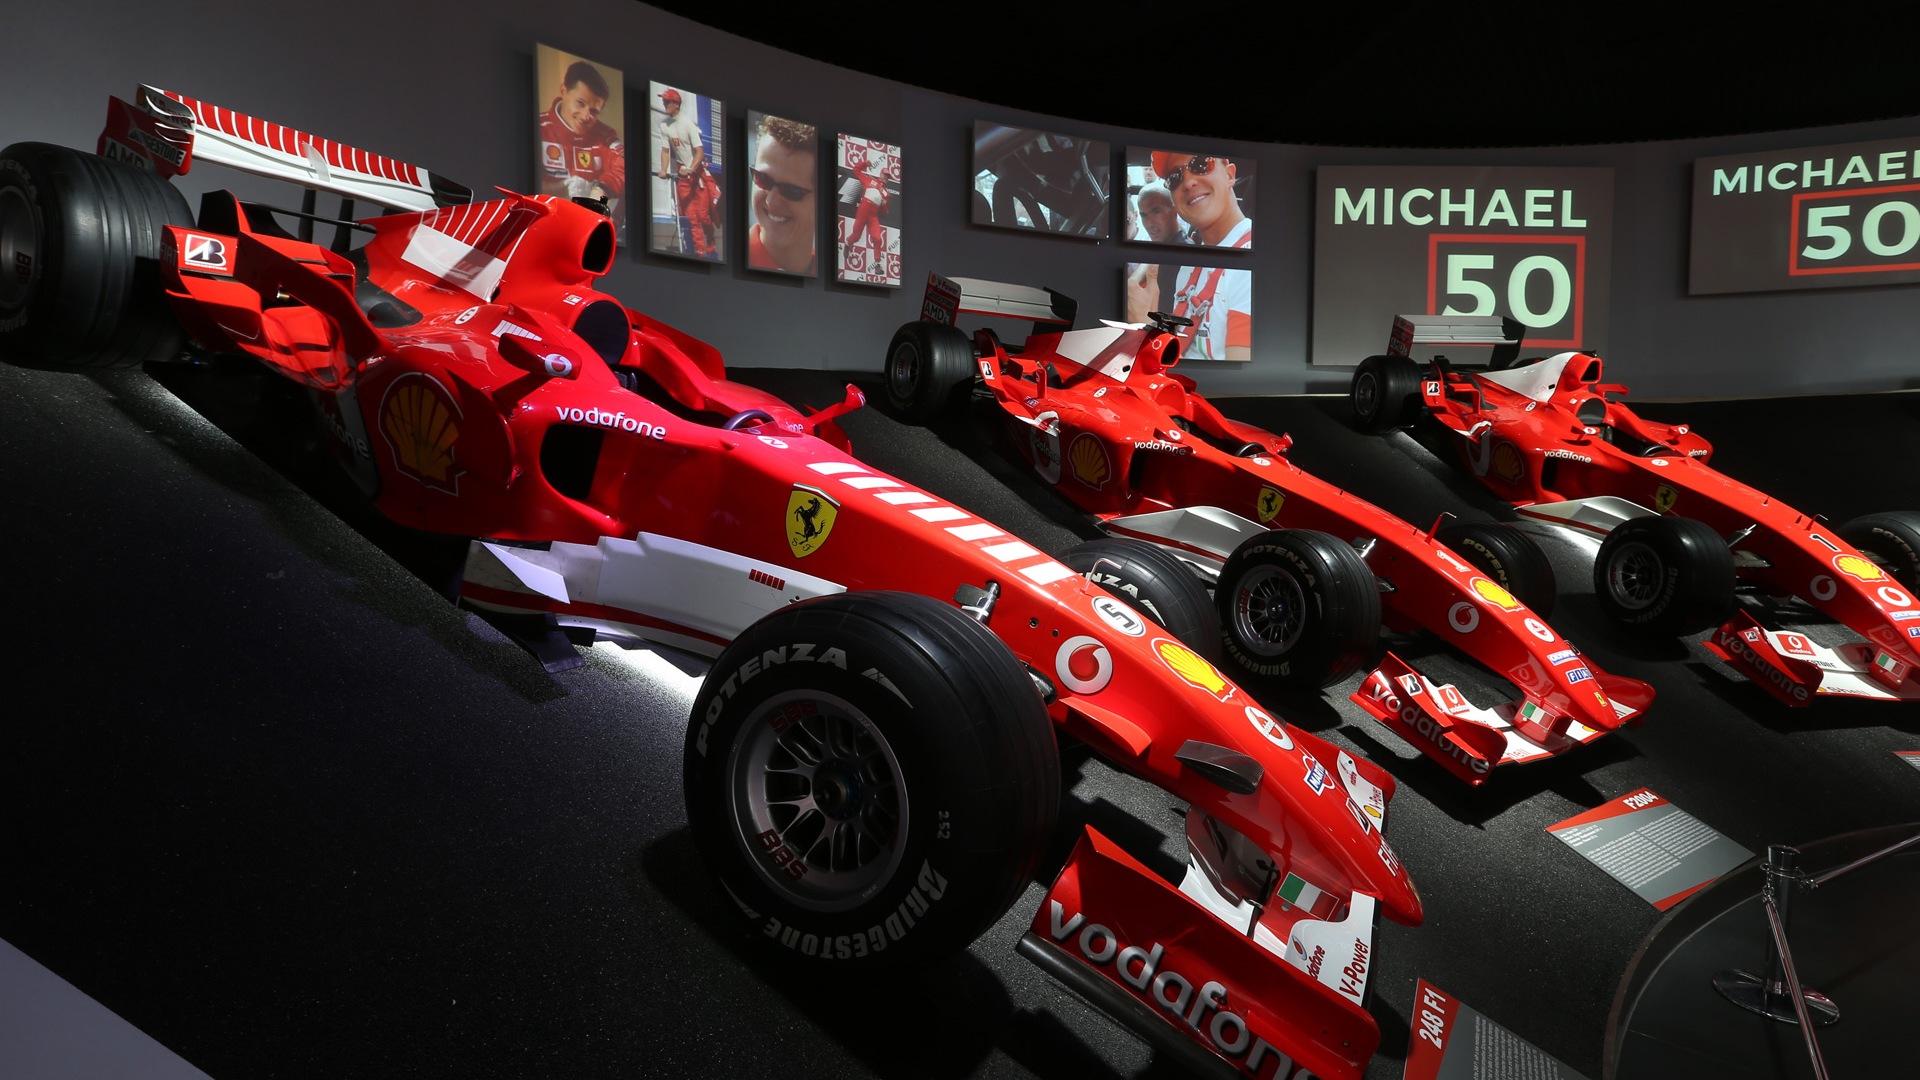 Michael Schumacher Exhibition At The Ferrari Museum - Ferrari S.p.a. - HD Wallpaper 